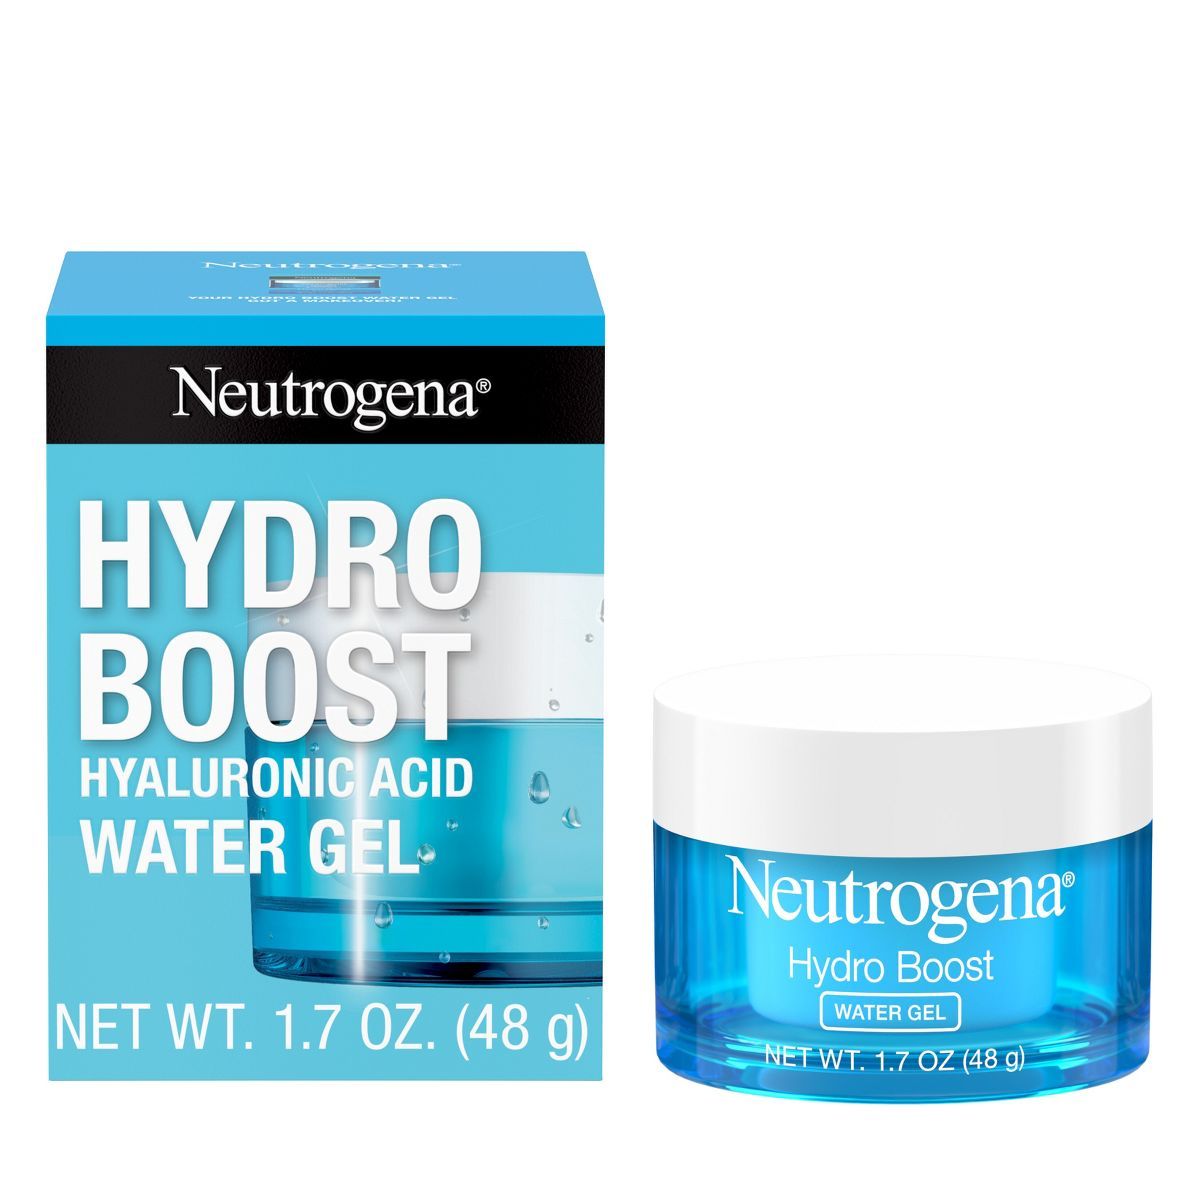 Neutrogena Hydro Boost Hyaluronic Acid Water Gel Moisturizer for Dry Skin - 1.7 oz | Target